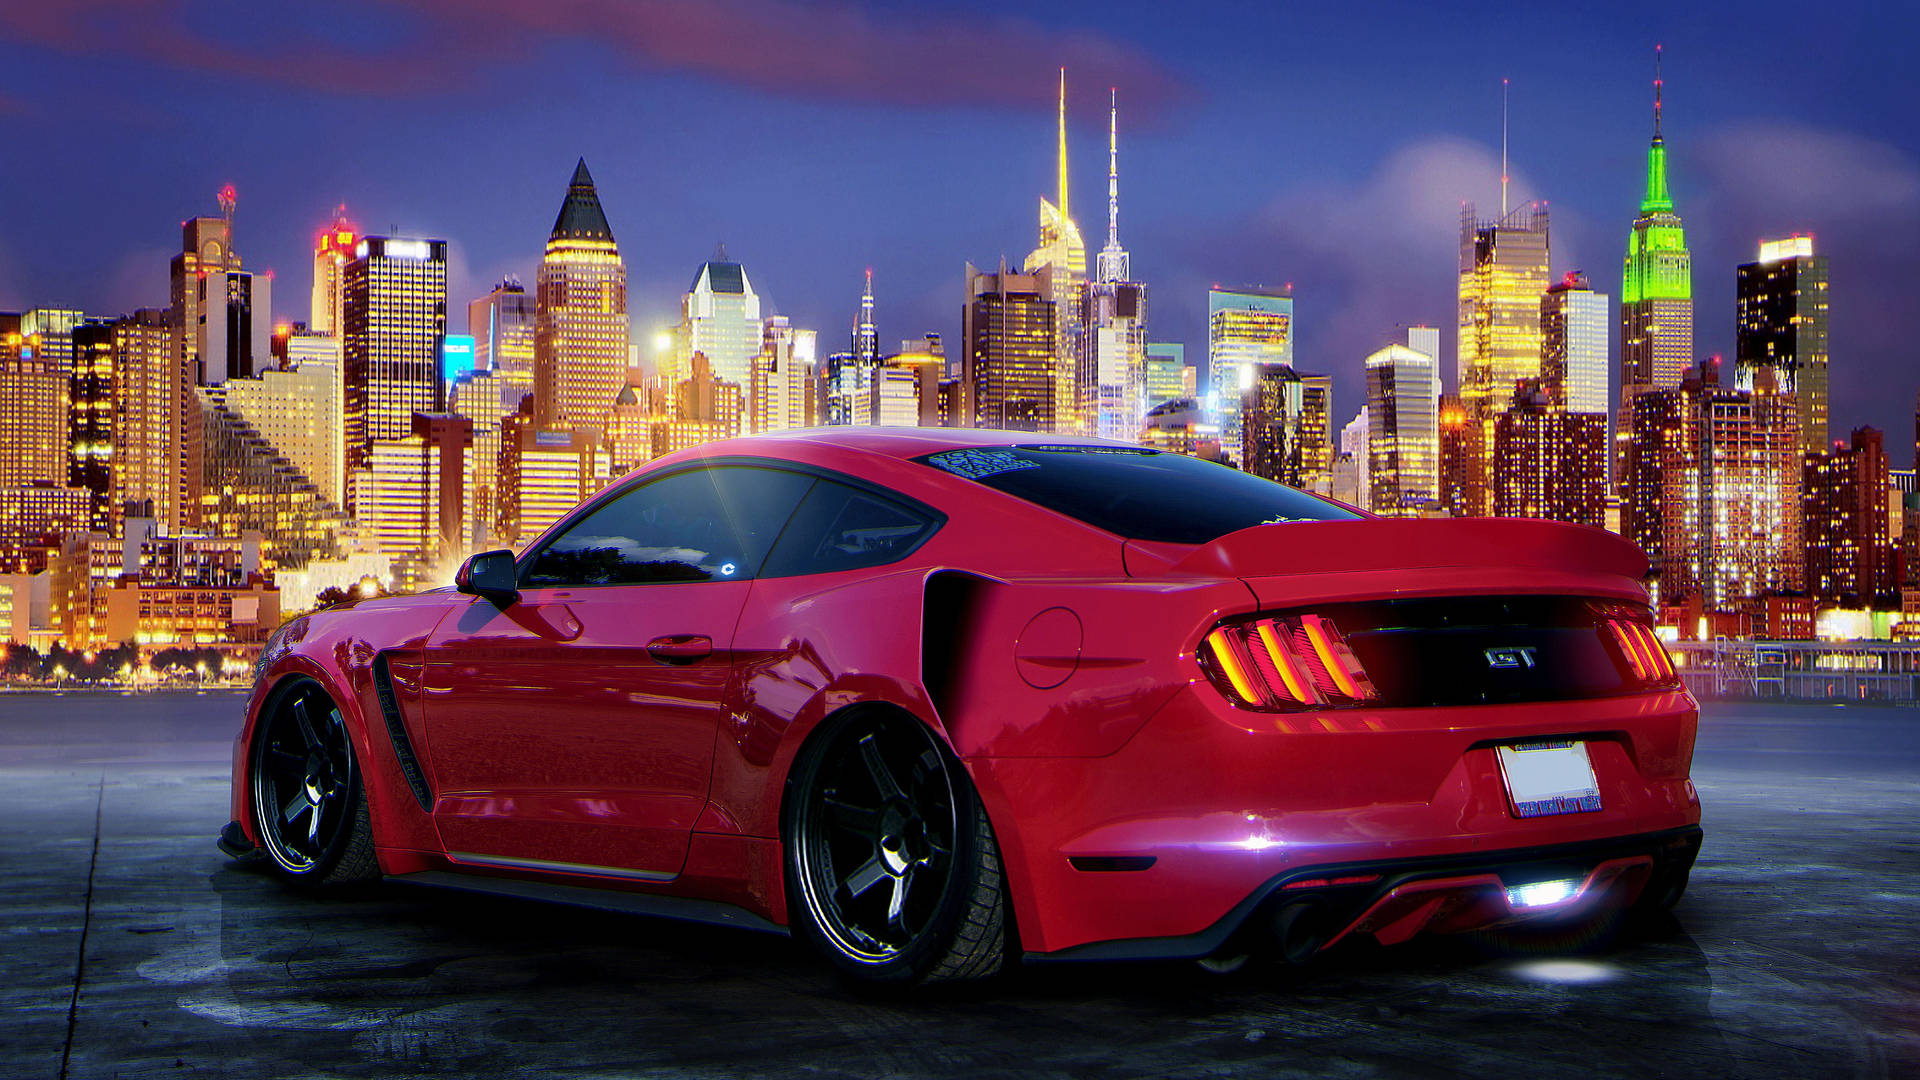 Red Mustang In City Wallpaper